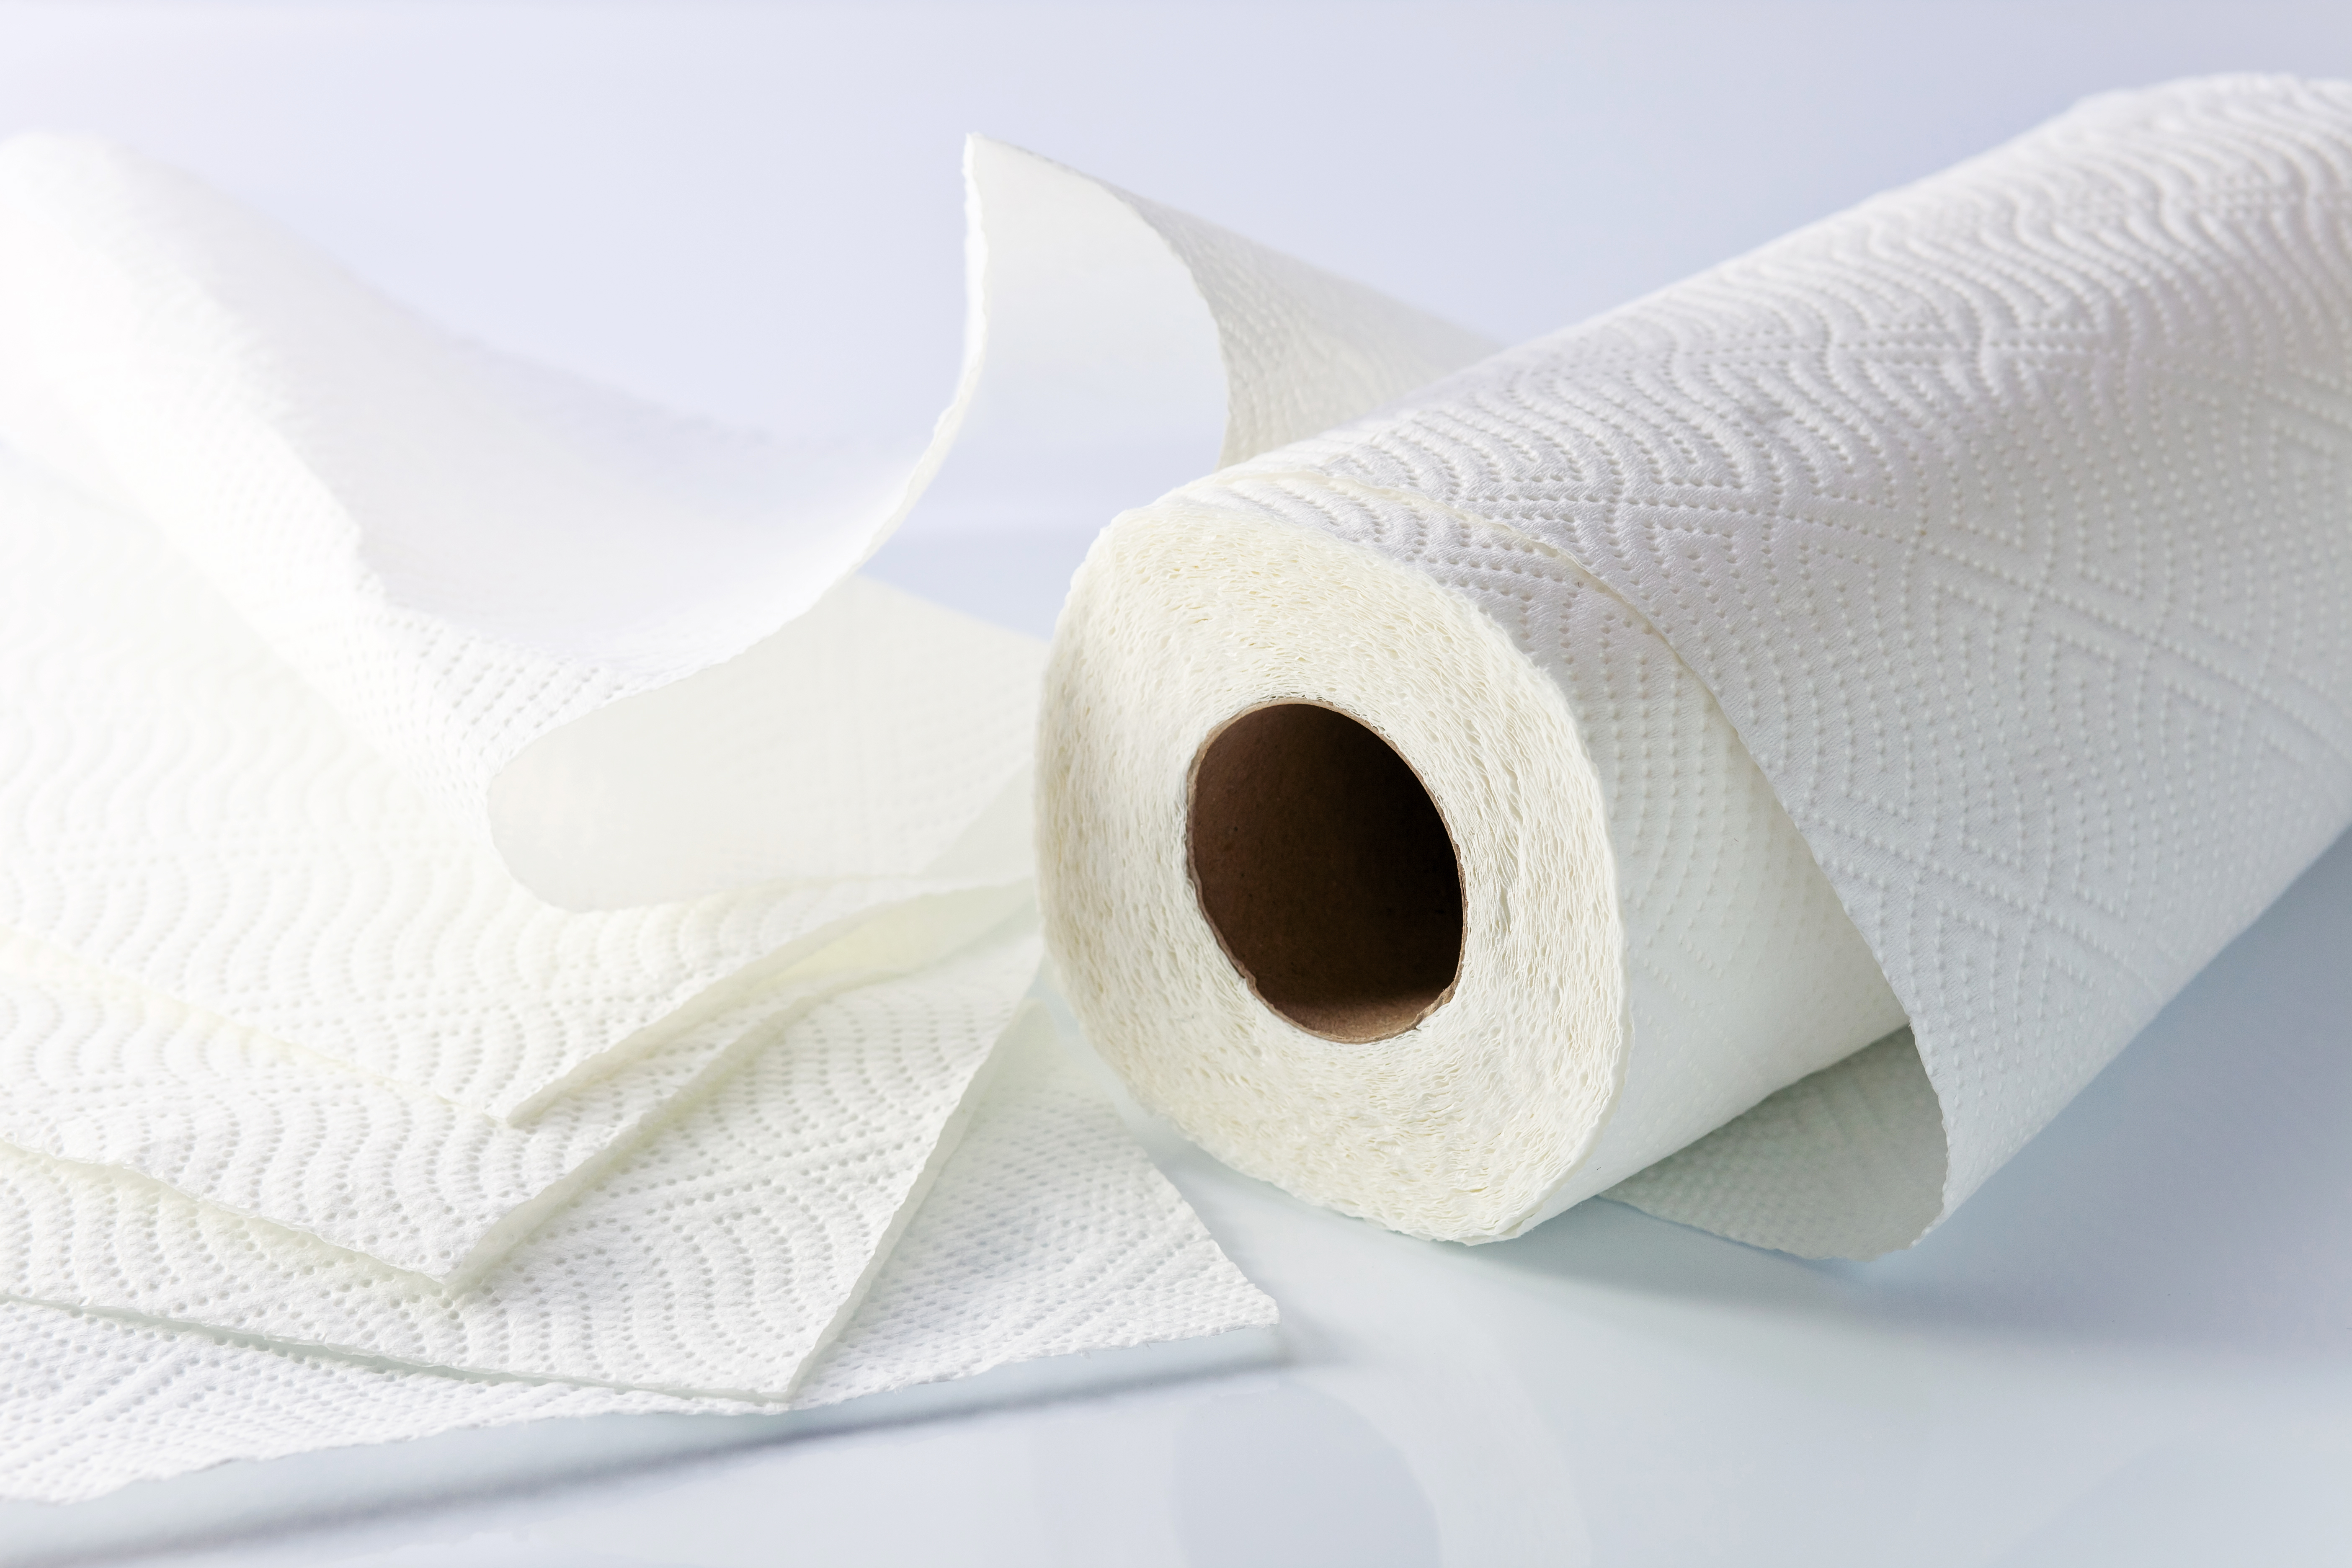 A toilet paper roll | Source: Shutterstock